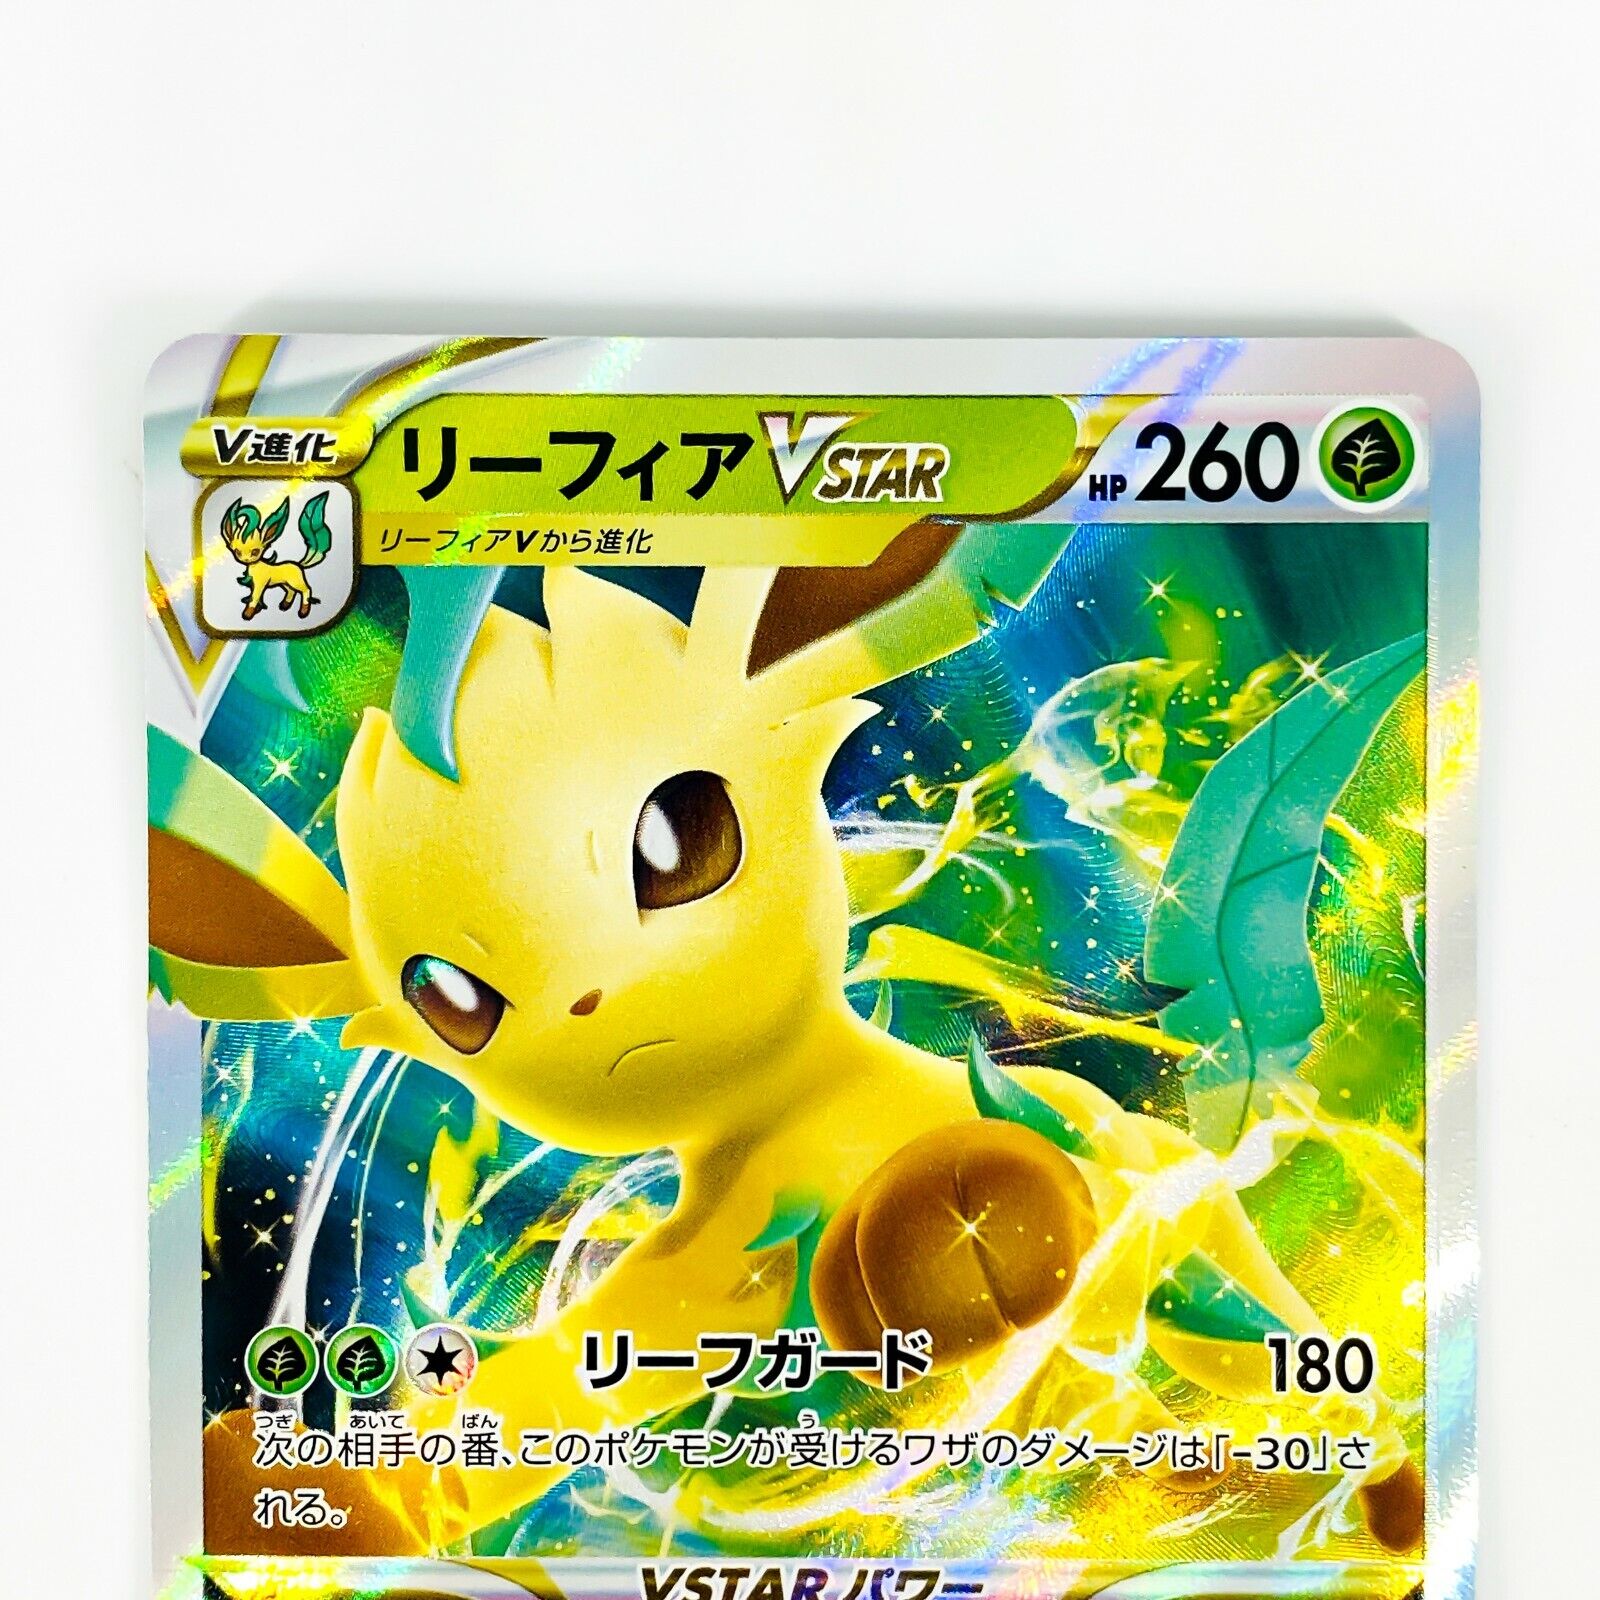 cc6065 Leafeon Grass - DP4 Leafeon Pokemon Card TCG Japan –